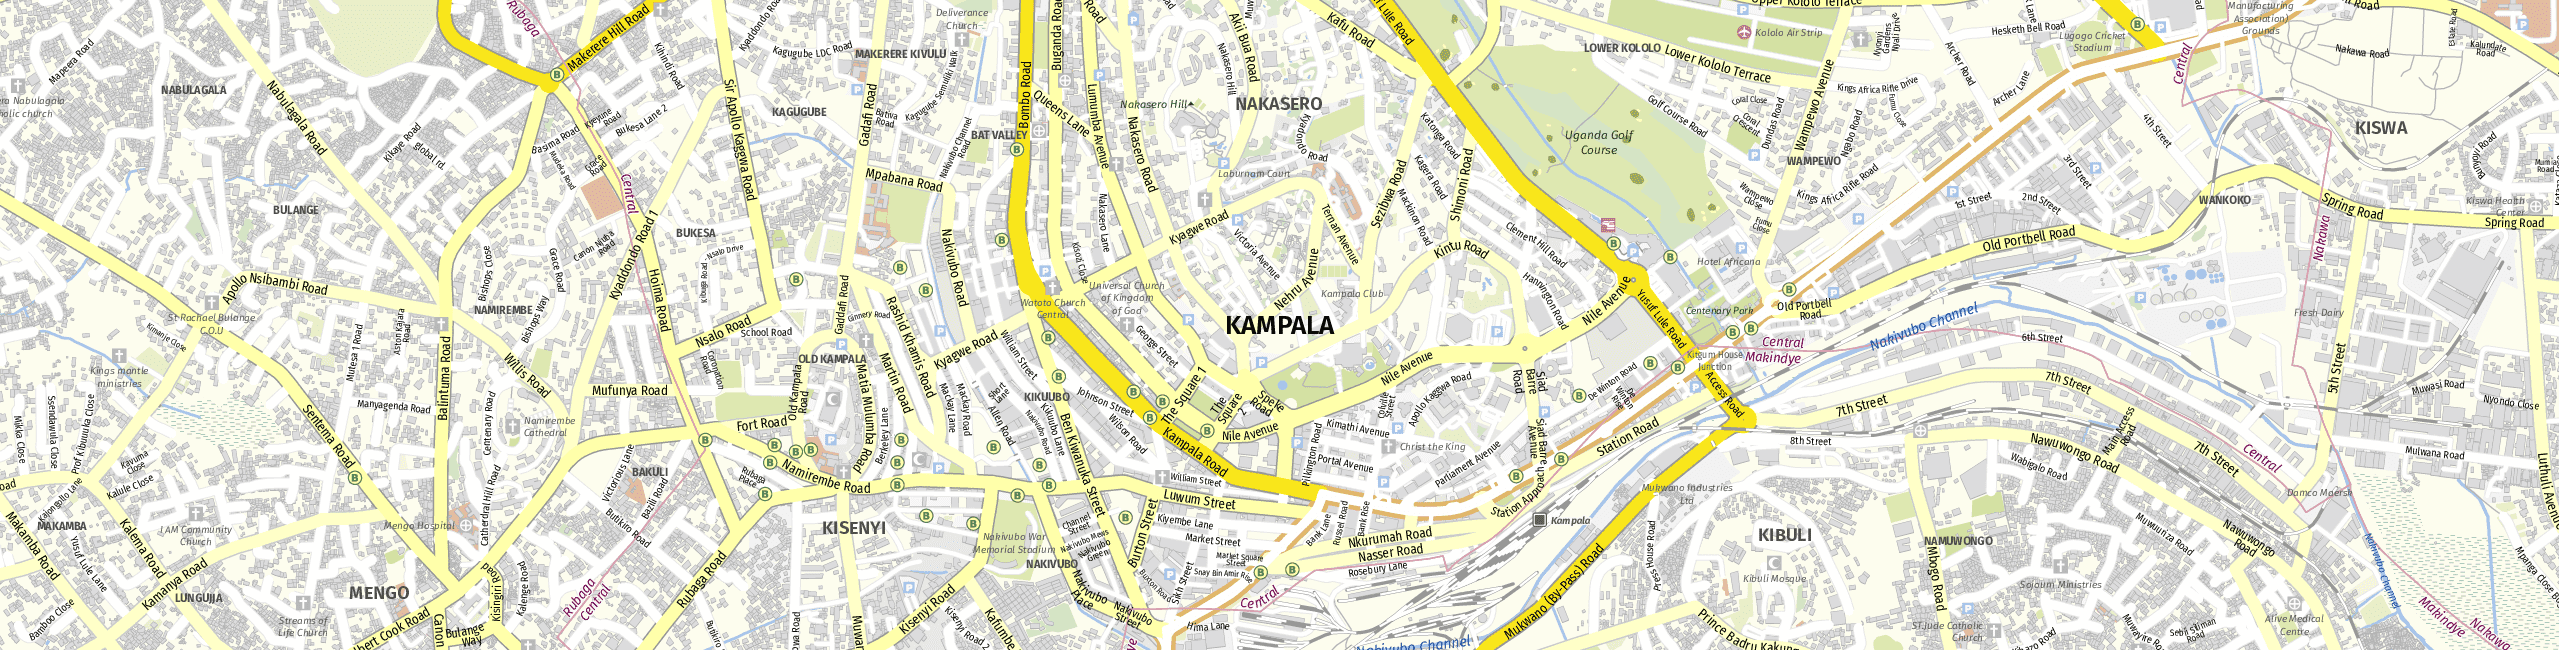 Stadtplan Kampala zum Downloaden.